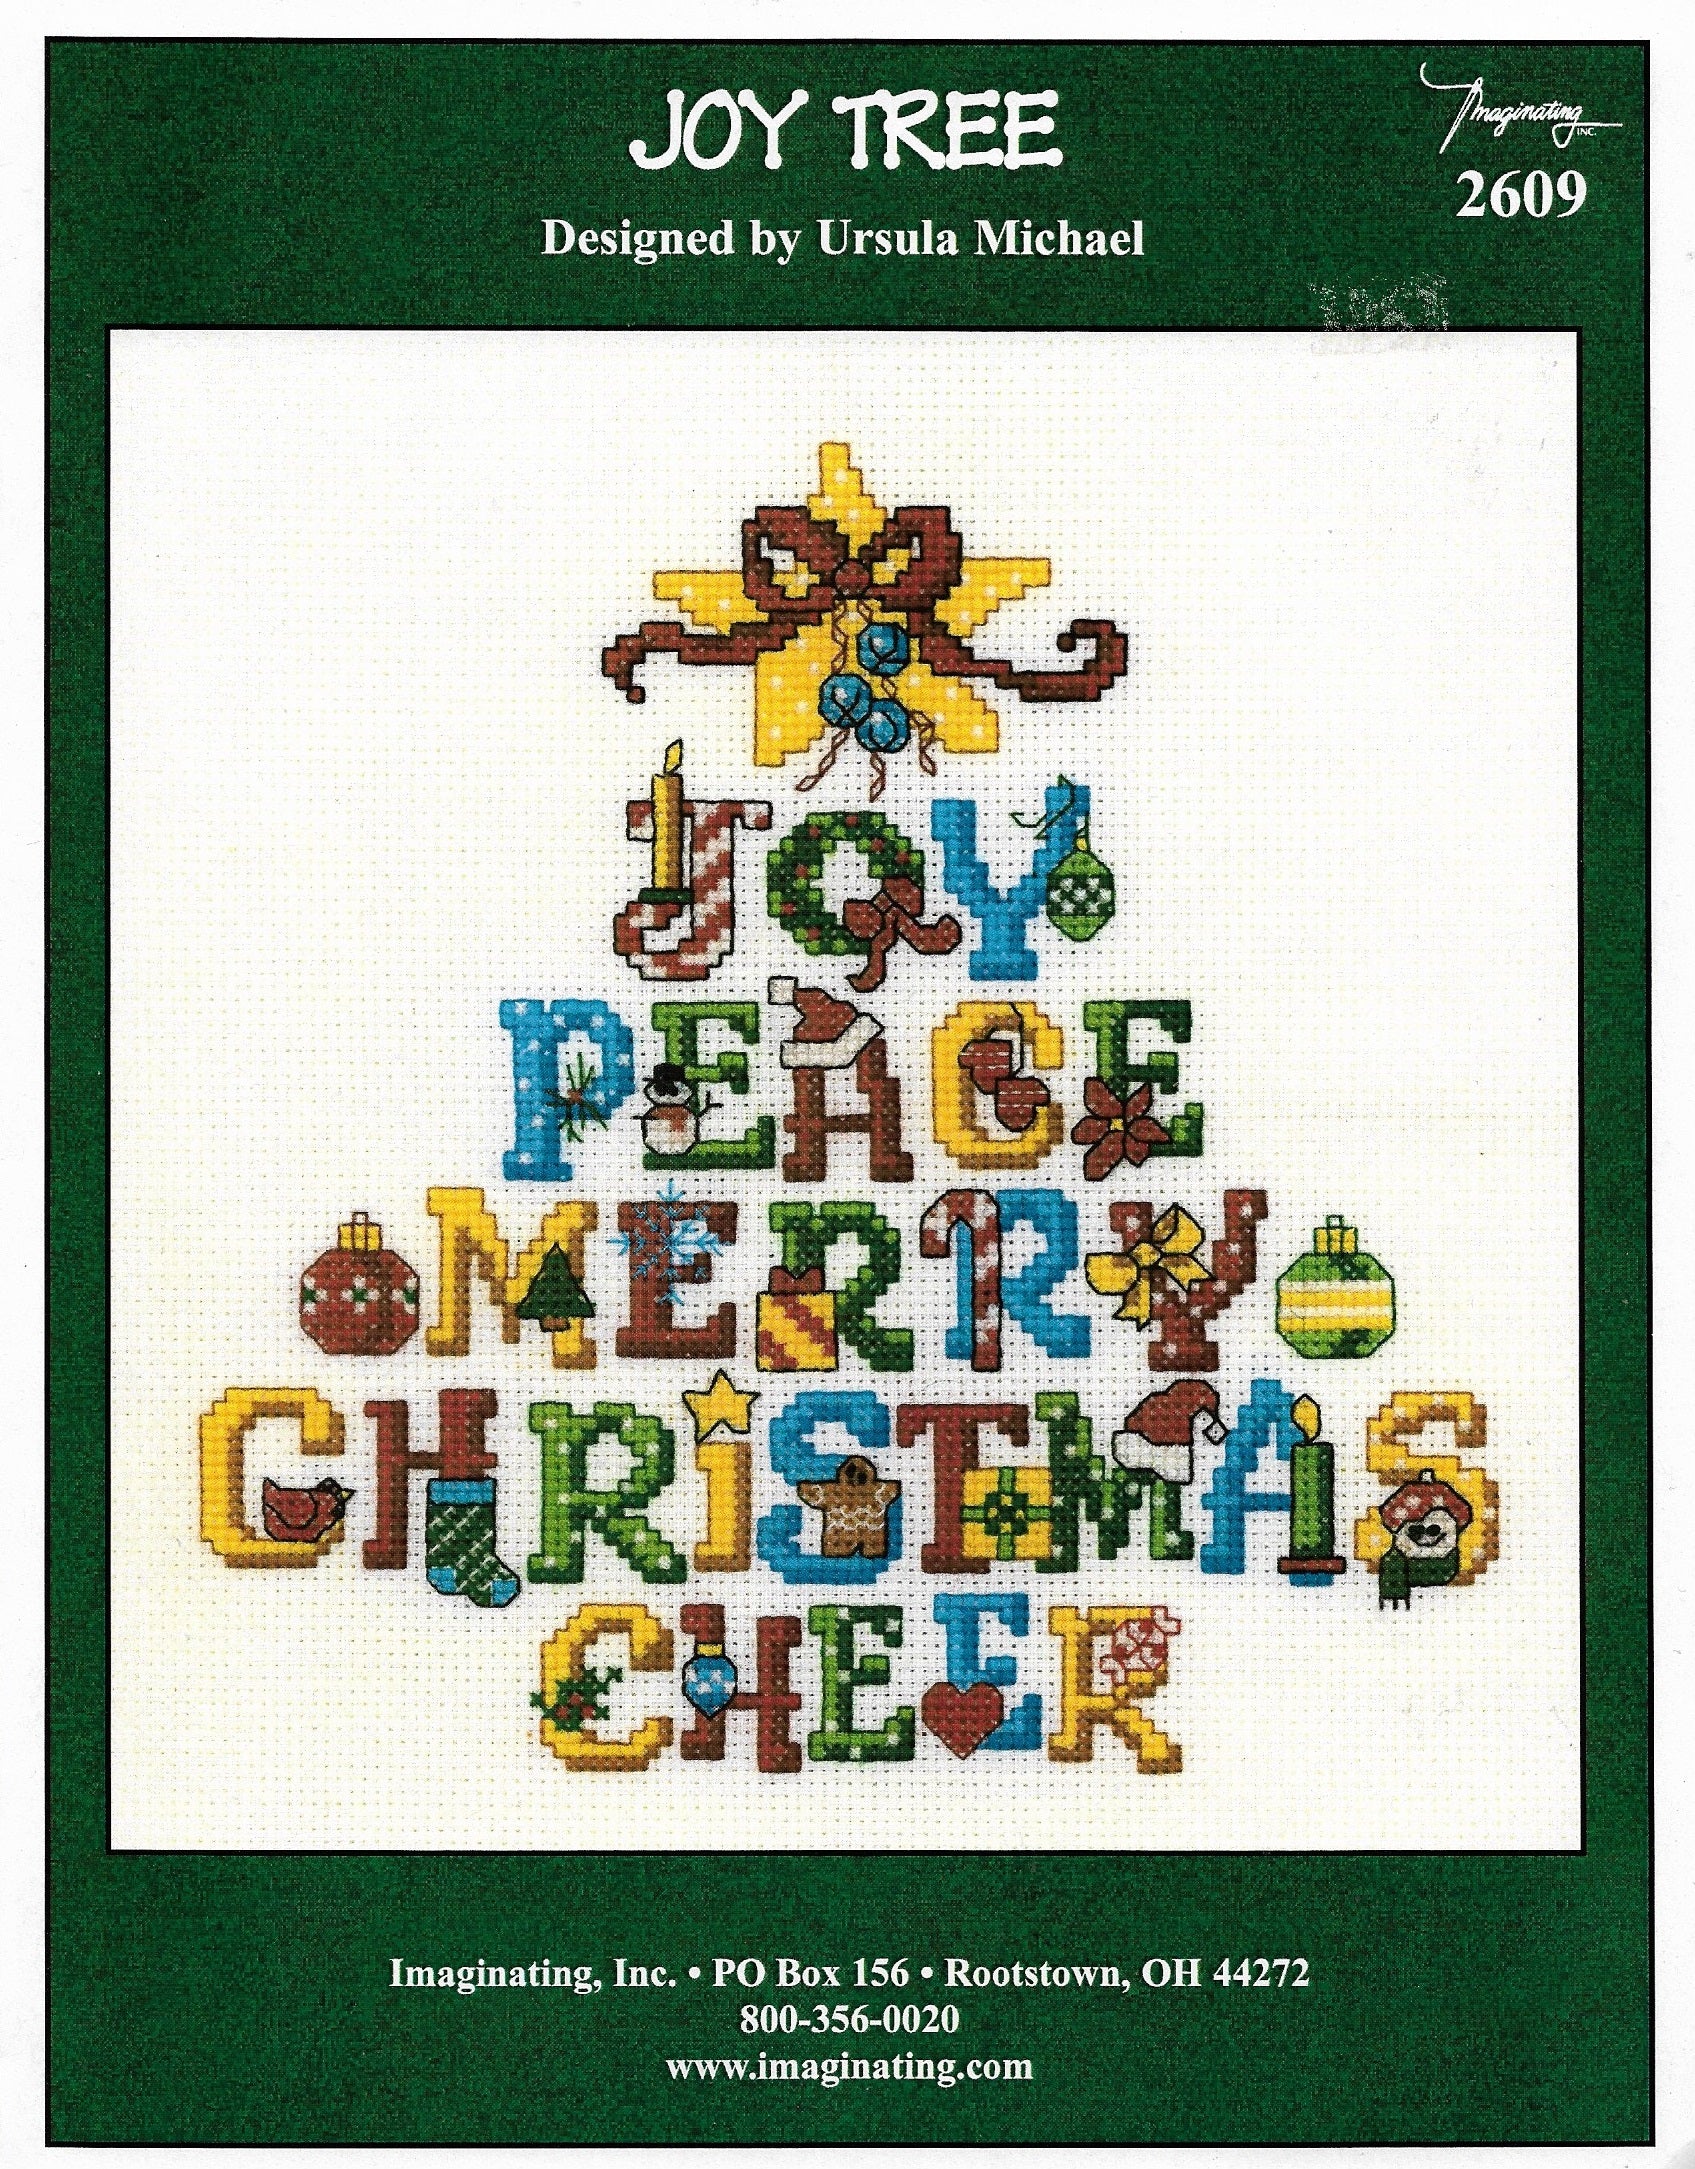 Imaginating Joy Tree 2609 Christmas cross stitch pattern